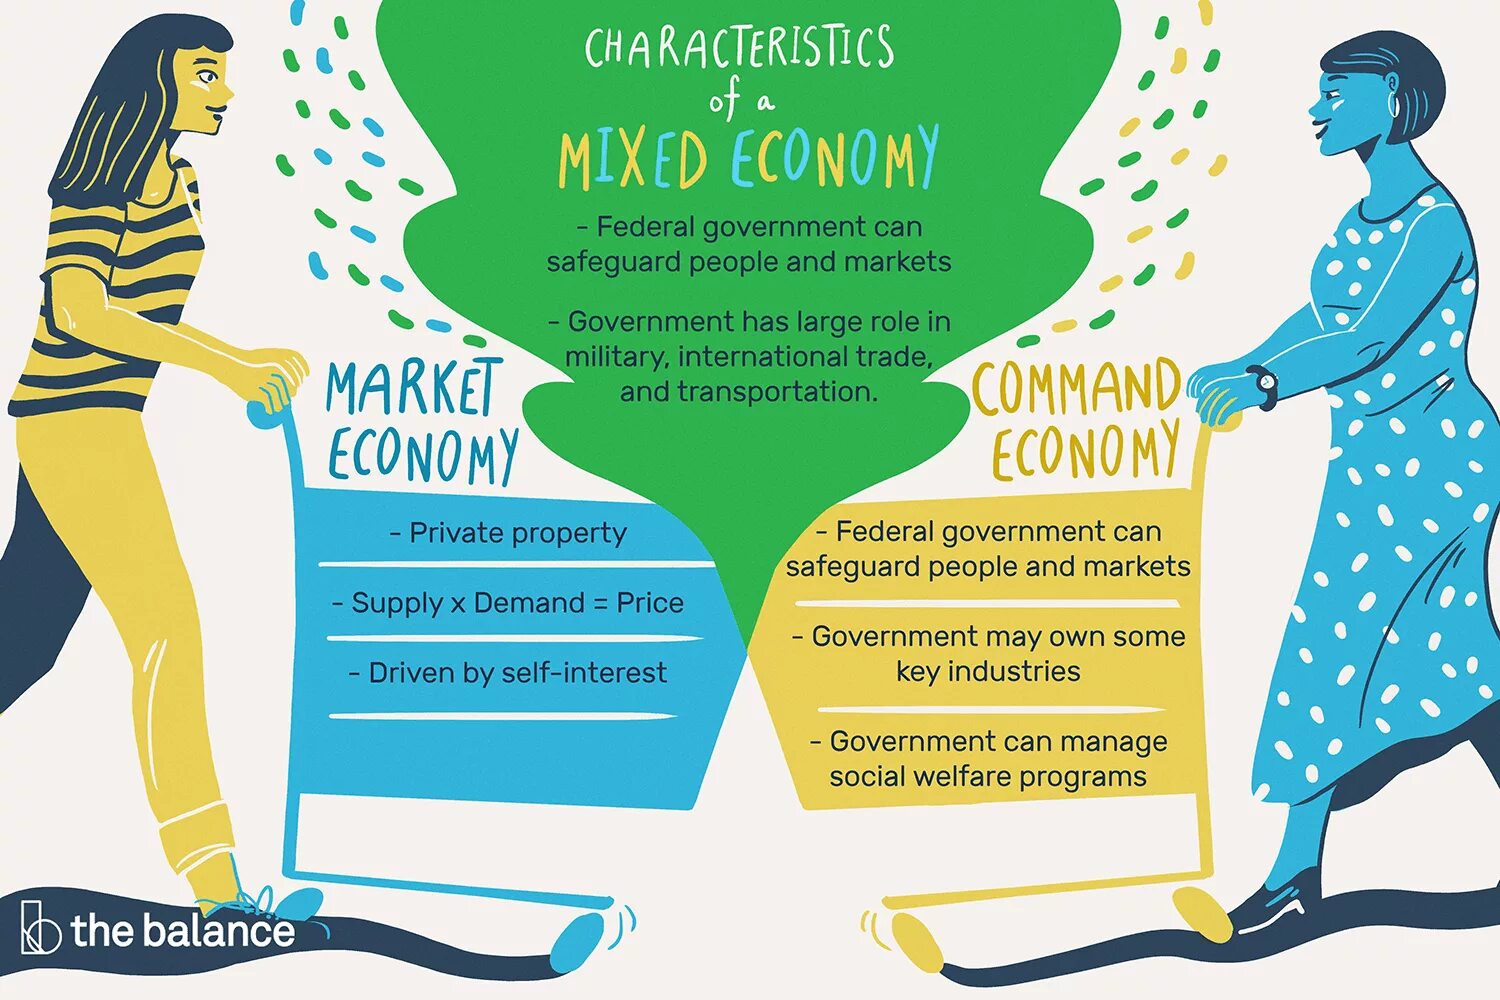 Economy system. Mixed economy. Market and Command economies. Market economic System. Mixed economic System.